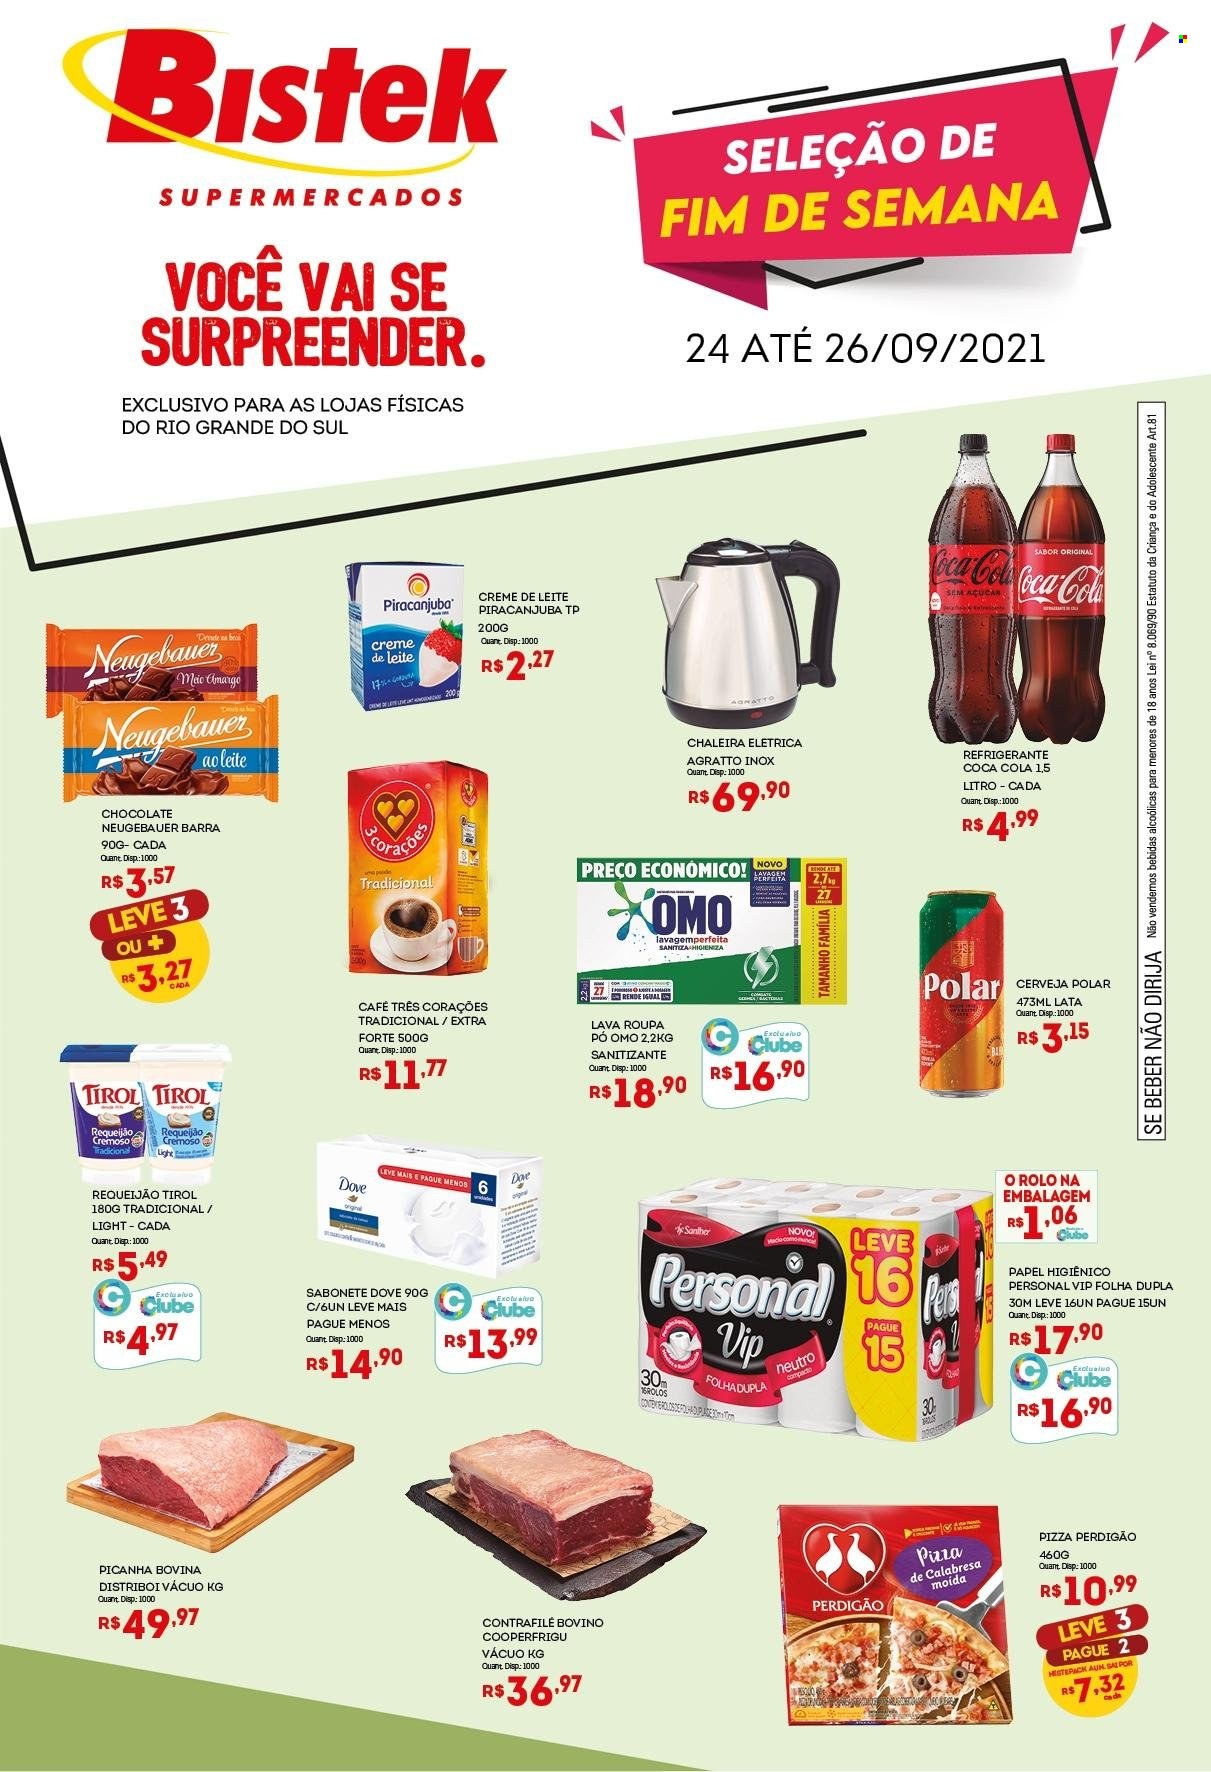 Encarte Bistek Supermercados  - 24.09.2021 - 26.09.2021.